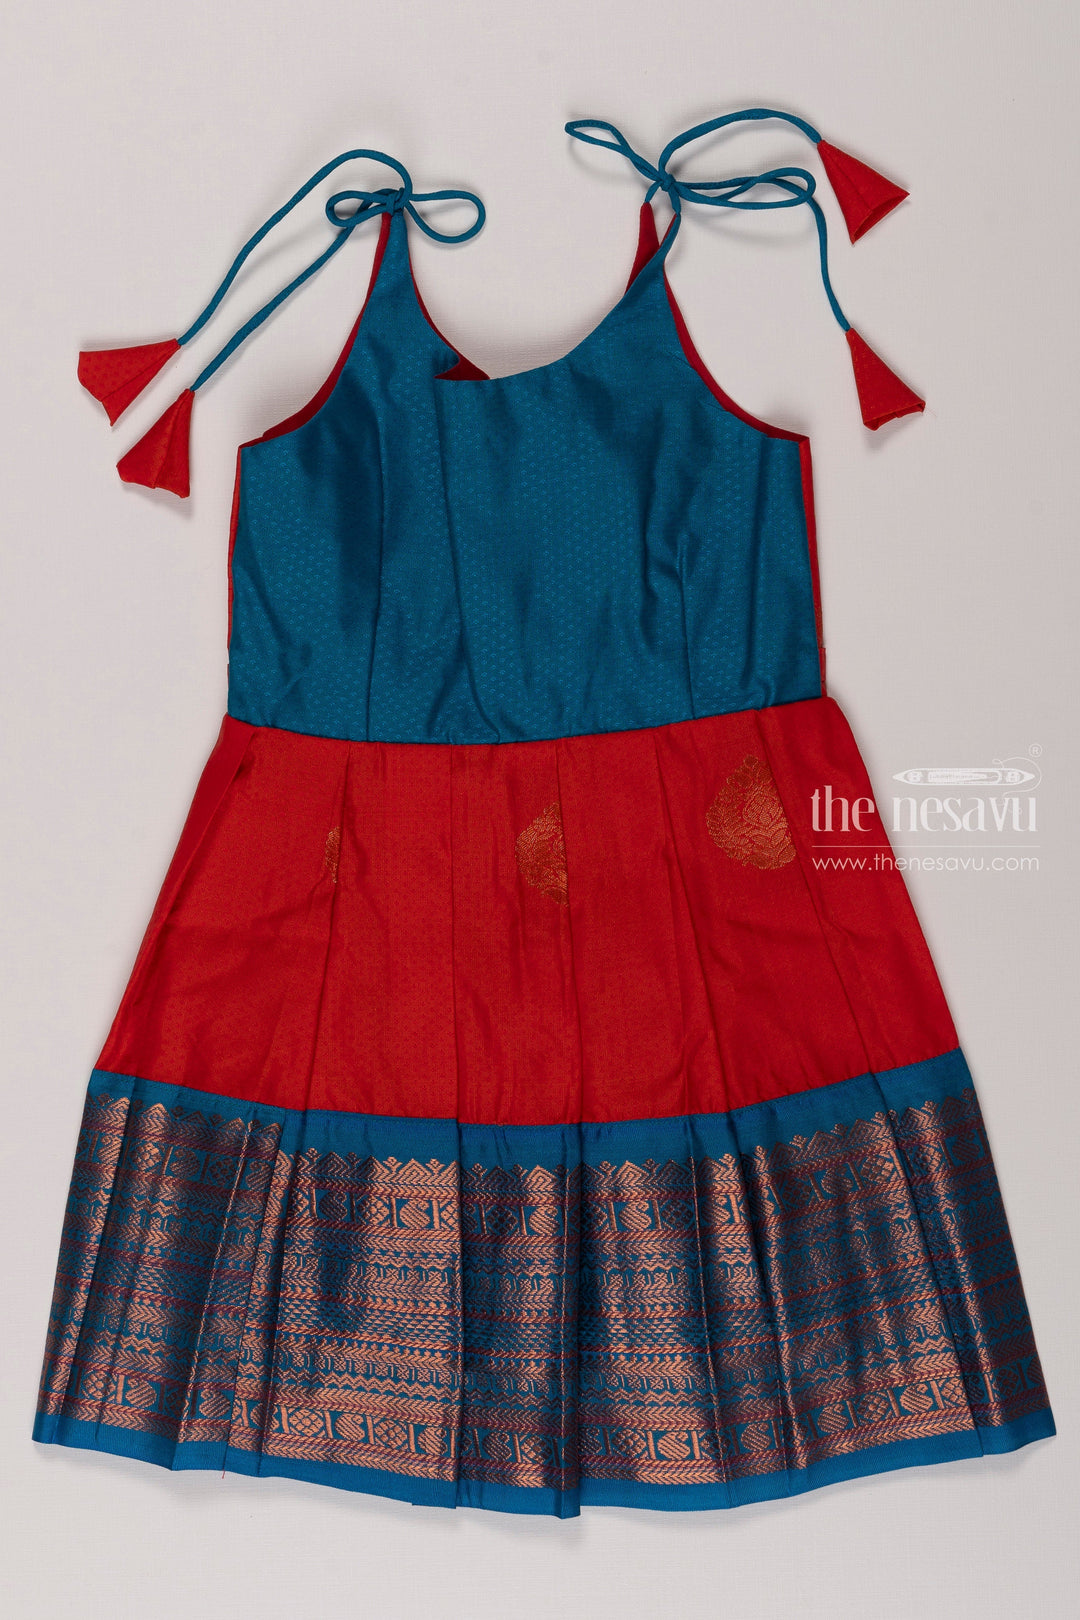 The Nesavu Tie-up Frock Chic Blue and Red Silk Tie-Up Frock for Girls Nesavu 18 (2Y) / Red / Style 3 T349C-18 Traditional Silk Dress for Kids | Festive Tie Up Silk Frock | The Nesavu